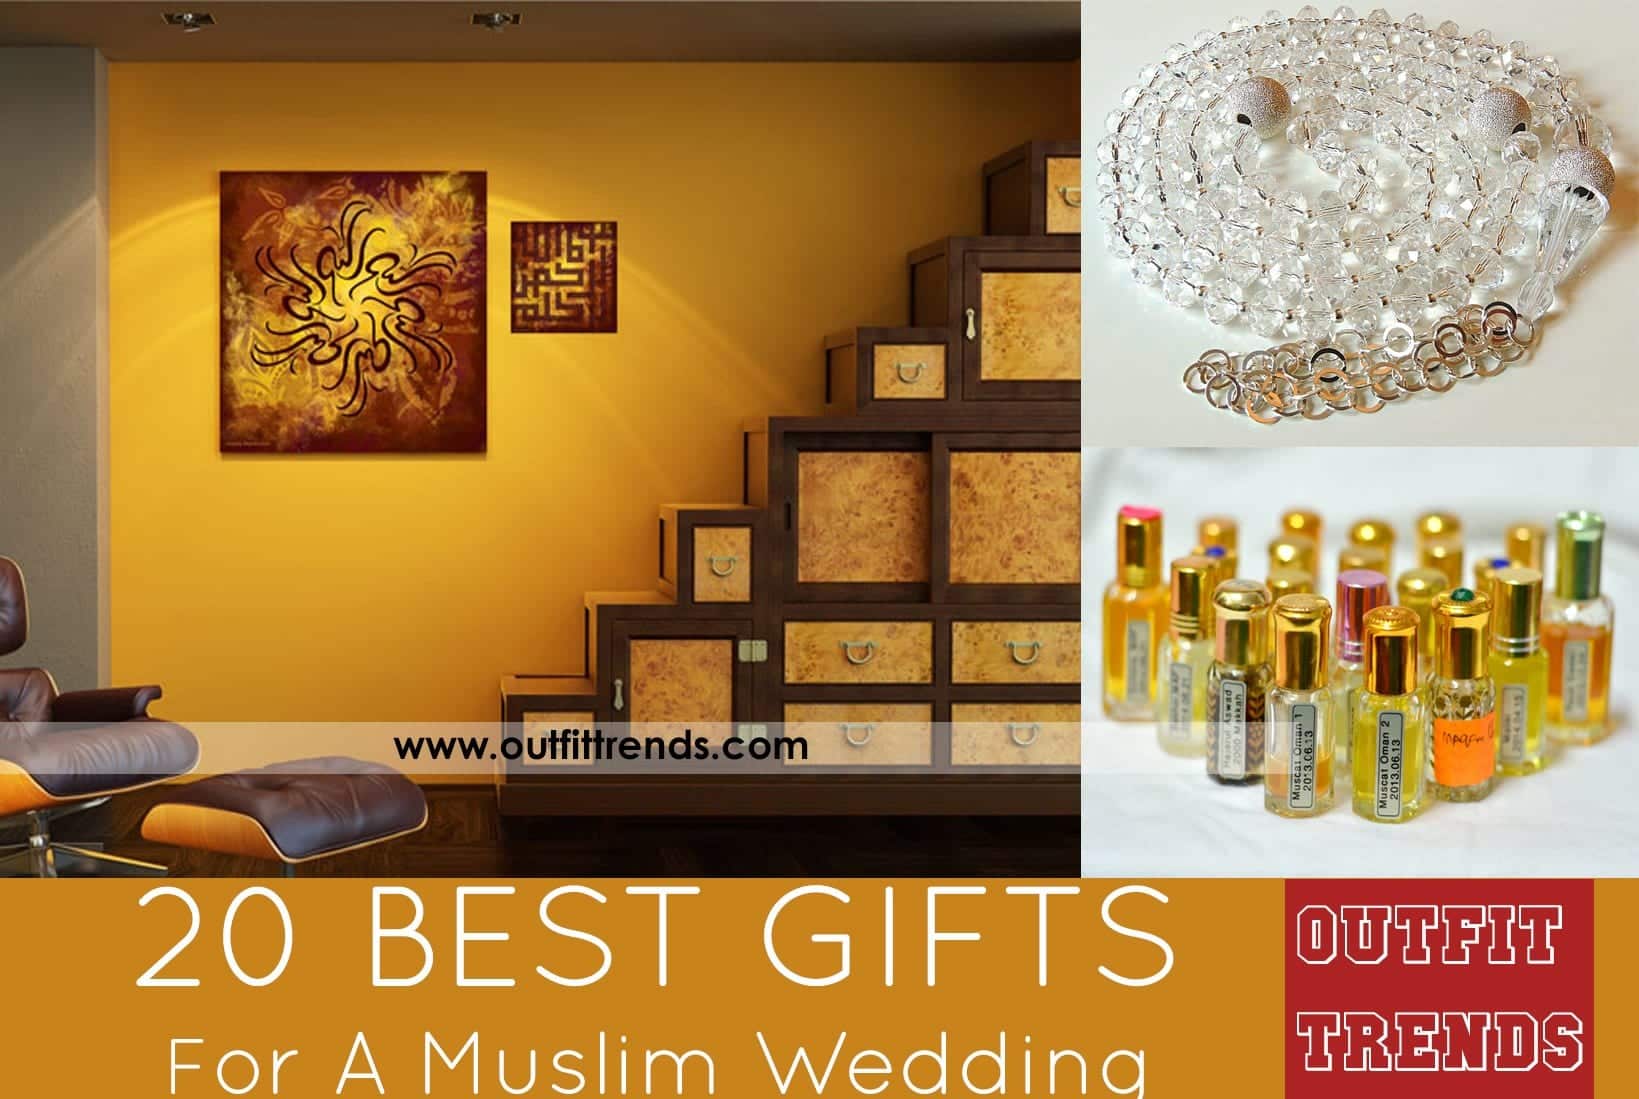 Muslim Wedding Gift Ideas 20 Best Gifts For Islamic Weddings